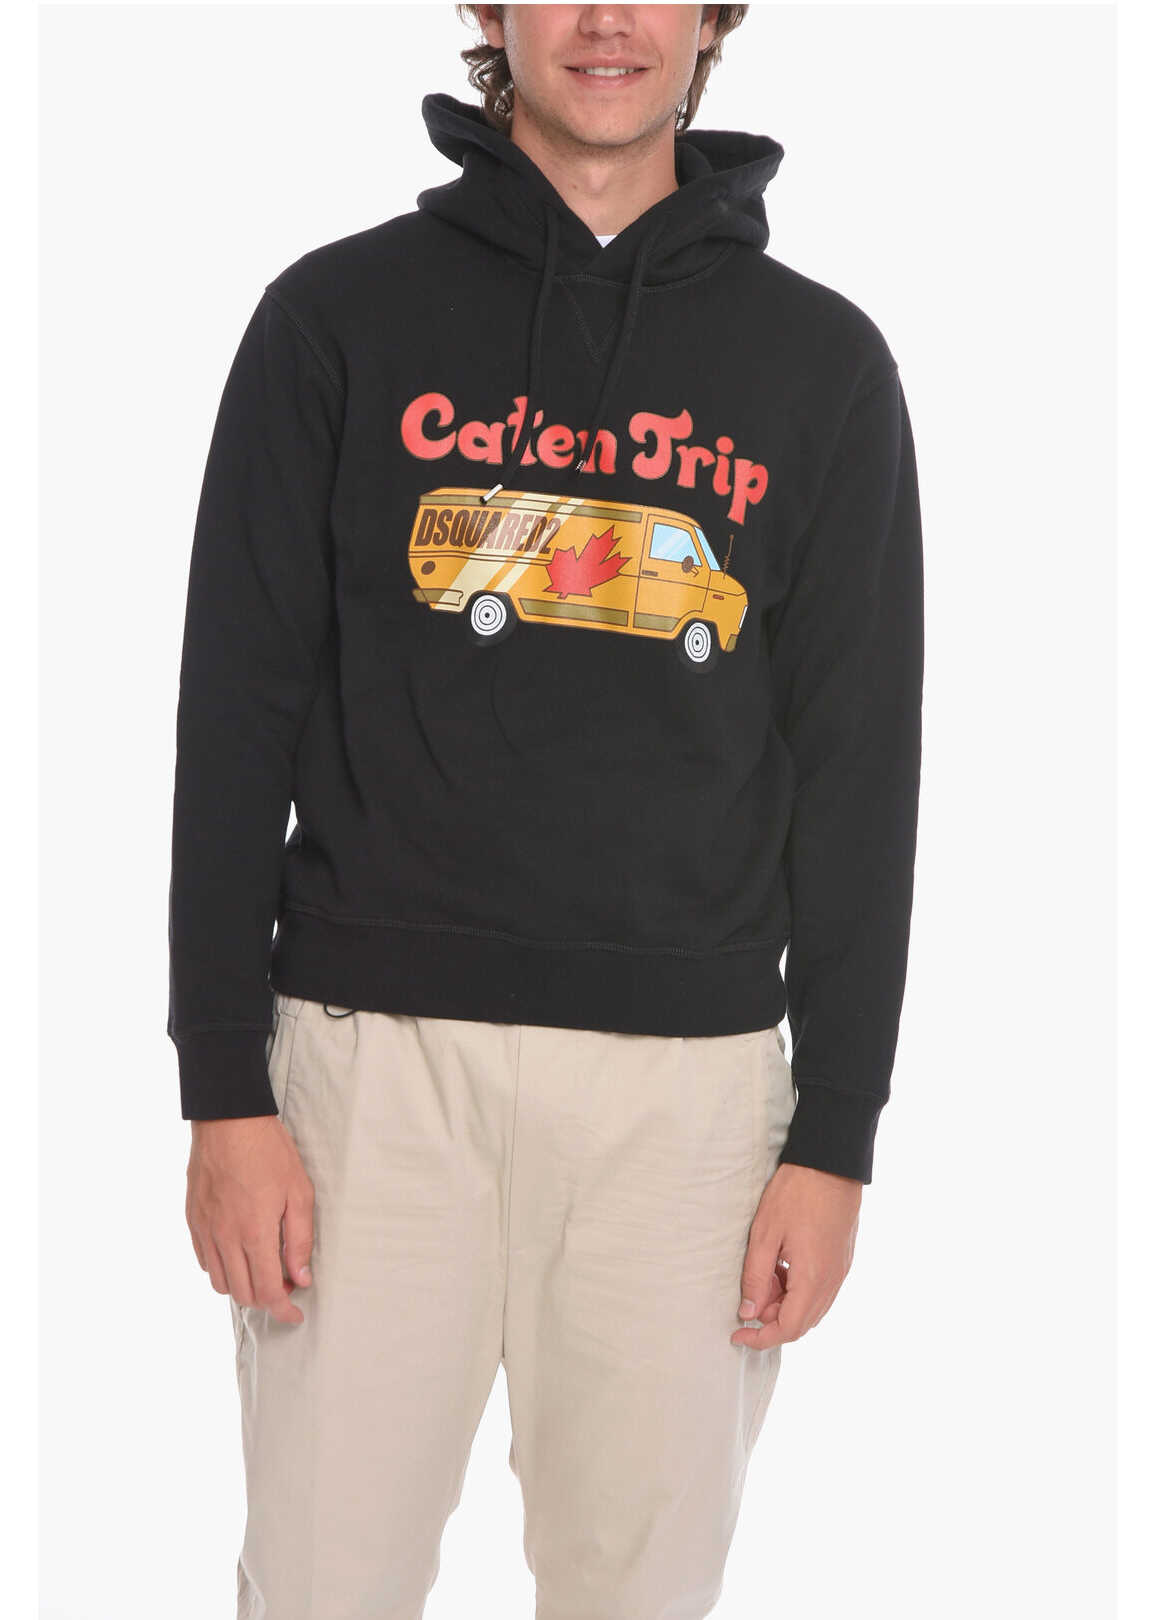 DSQUARED2 Caten Trip Hoodie Sweatshirt With Graphic Print Black